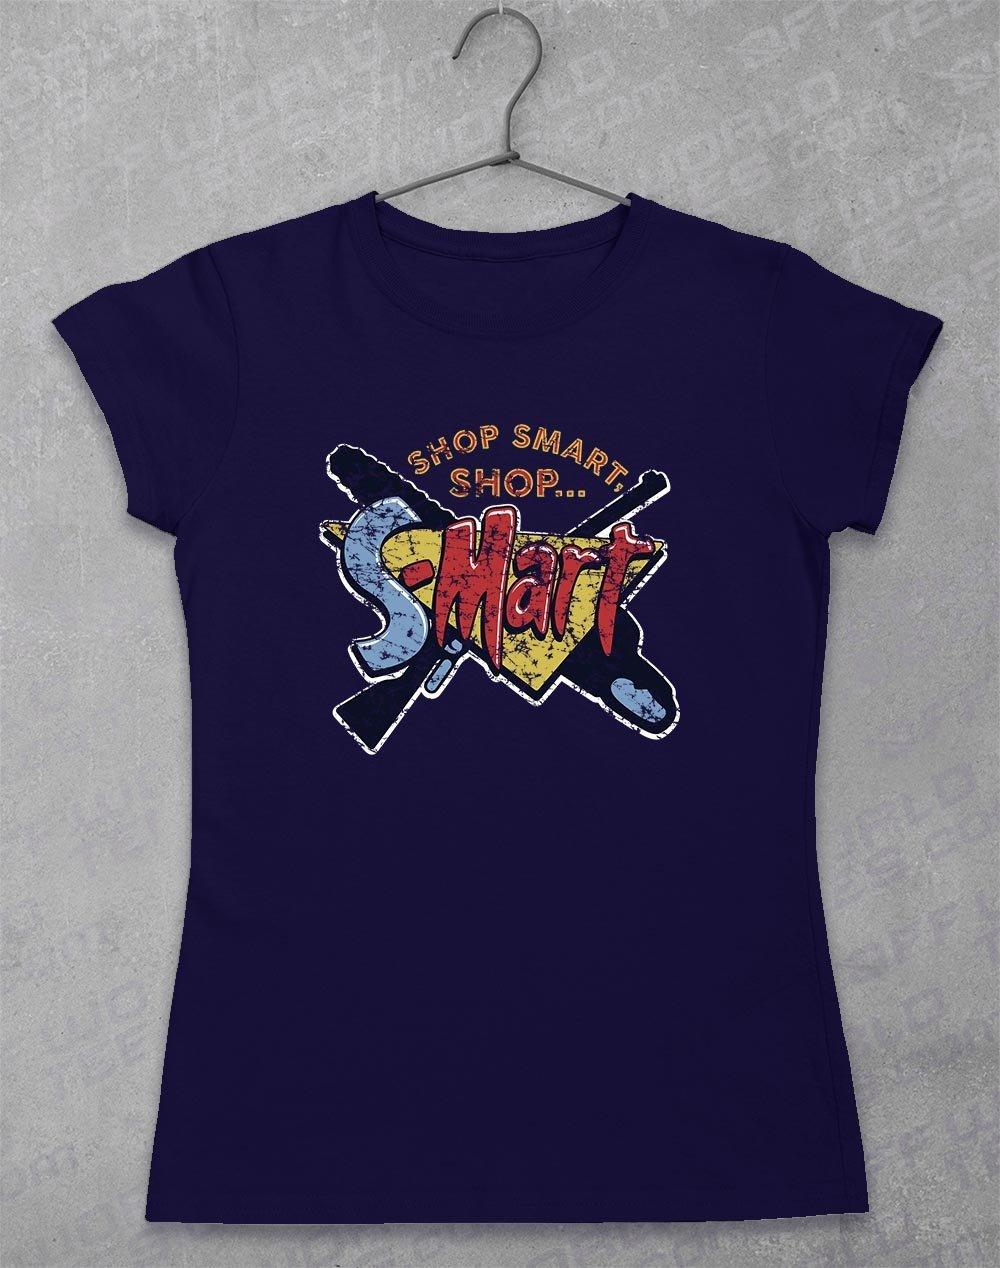 S-Mart Chainsaw and Gun Women's T-Shirt 8-10 / Navy  - Off World Tees